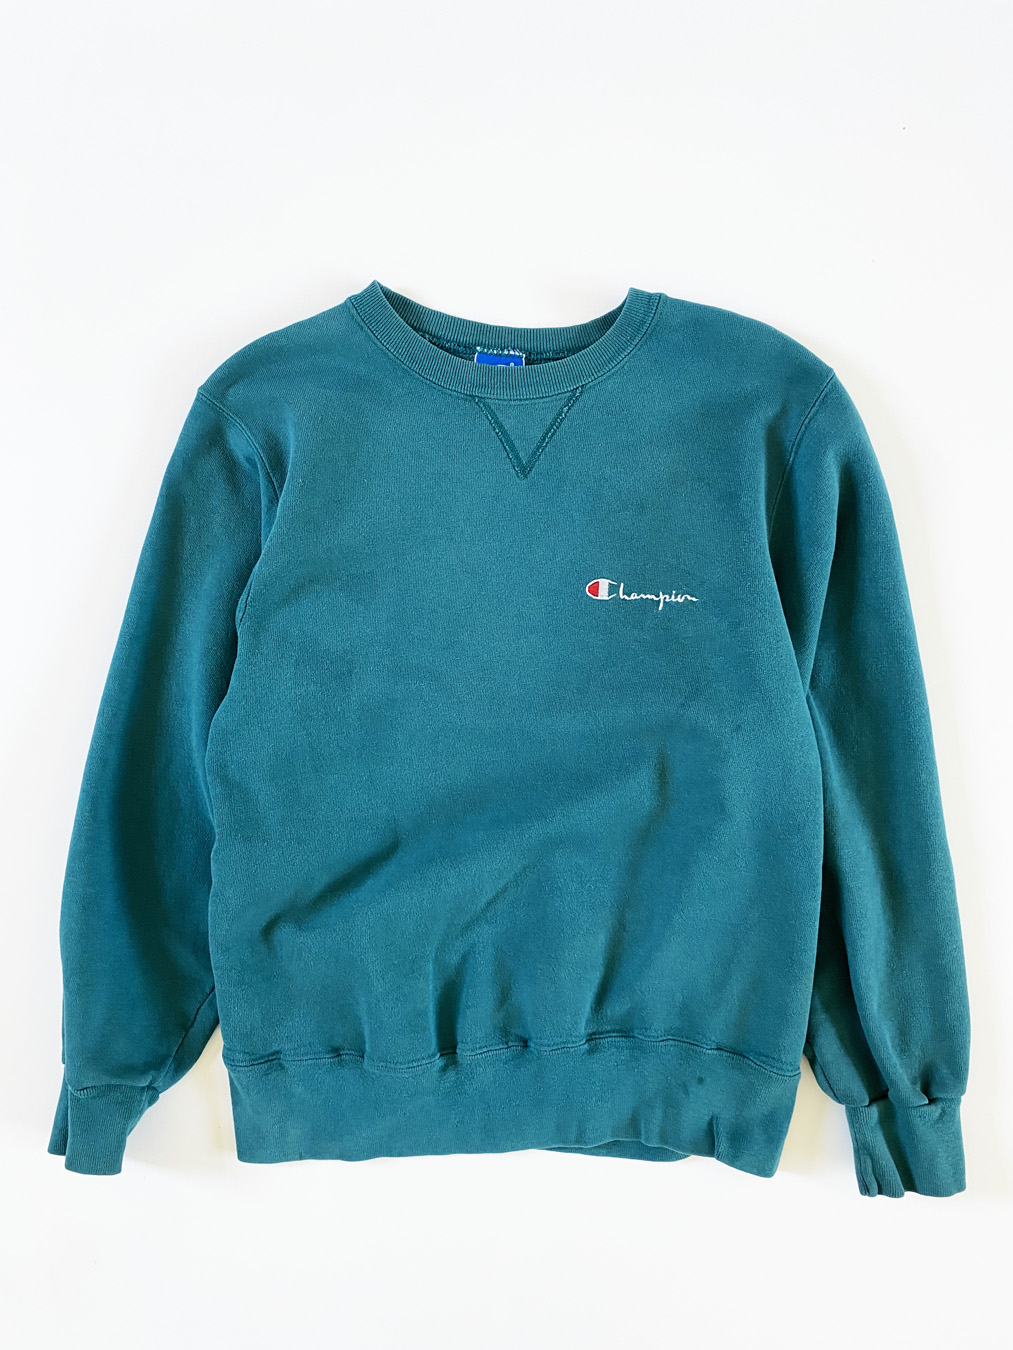 90s Champion Teal Crewneck Sweater - 5 Star Vintage